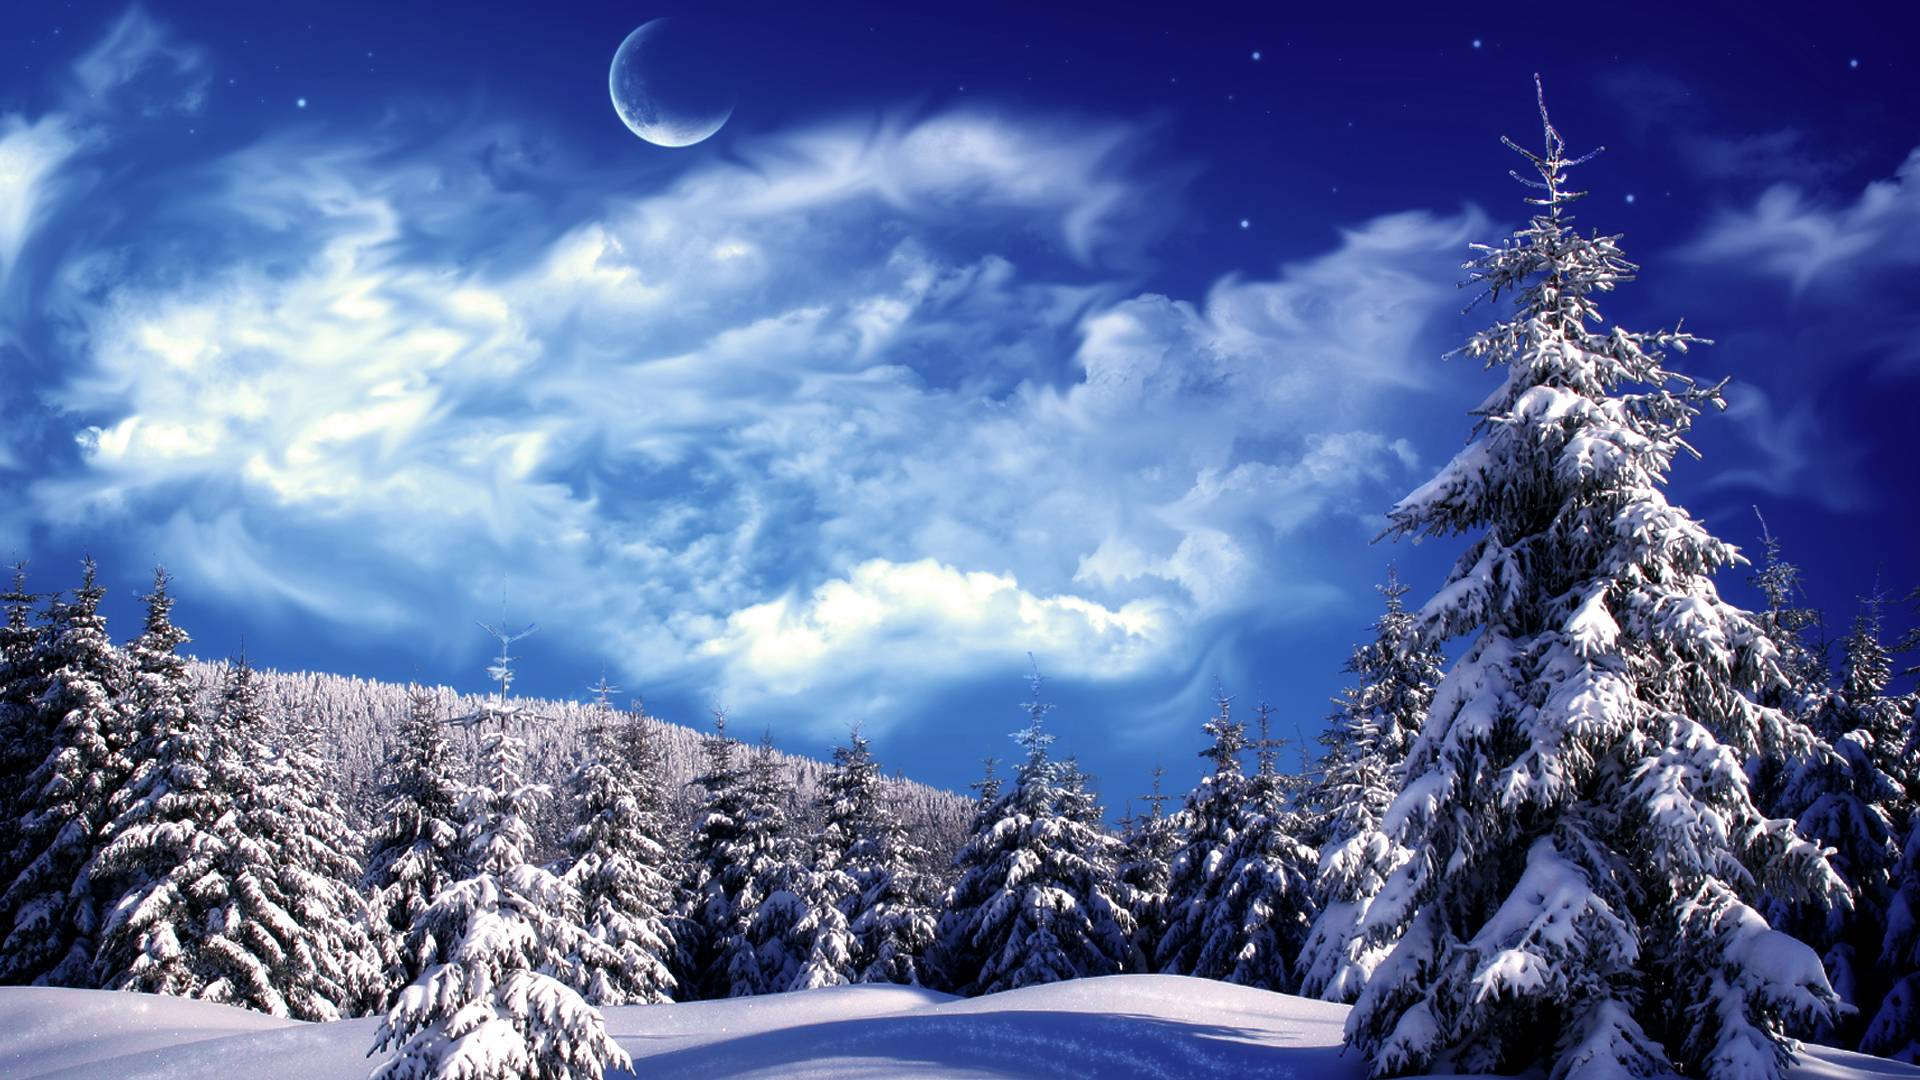 10 Latest Winter Wonderland Wallpaper Hd FULL HD 1080p For PC Desktop